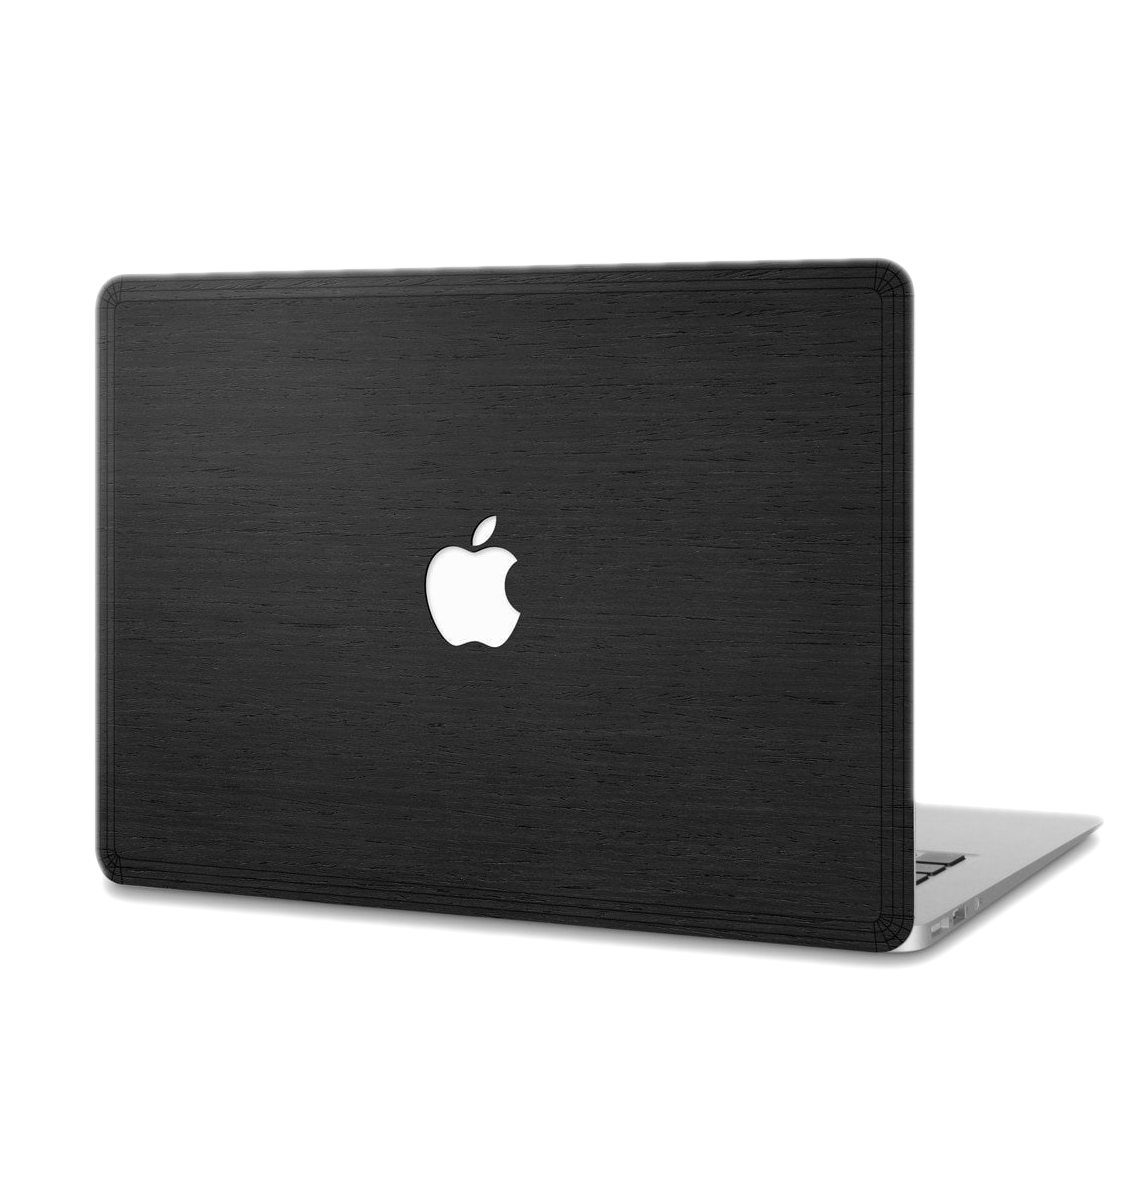 Macbook pro black